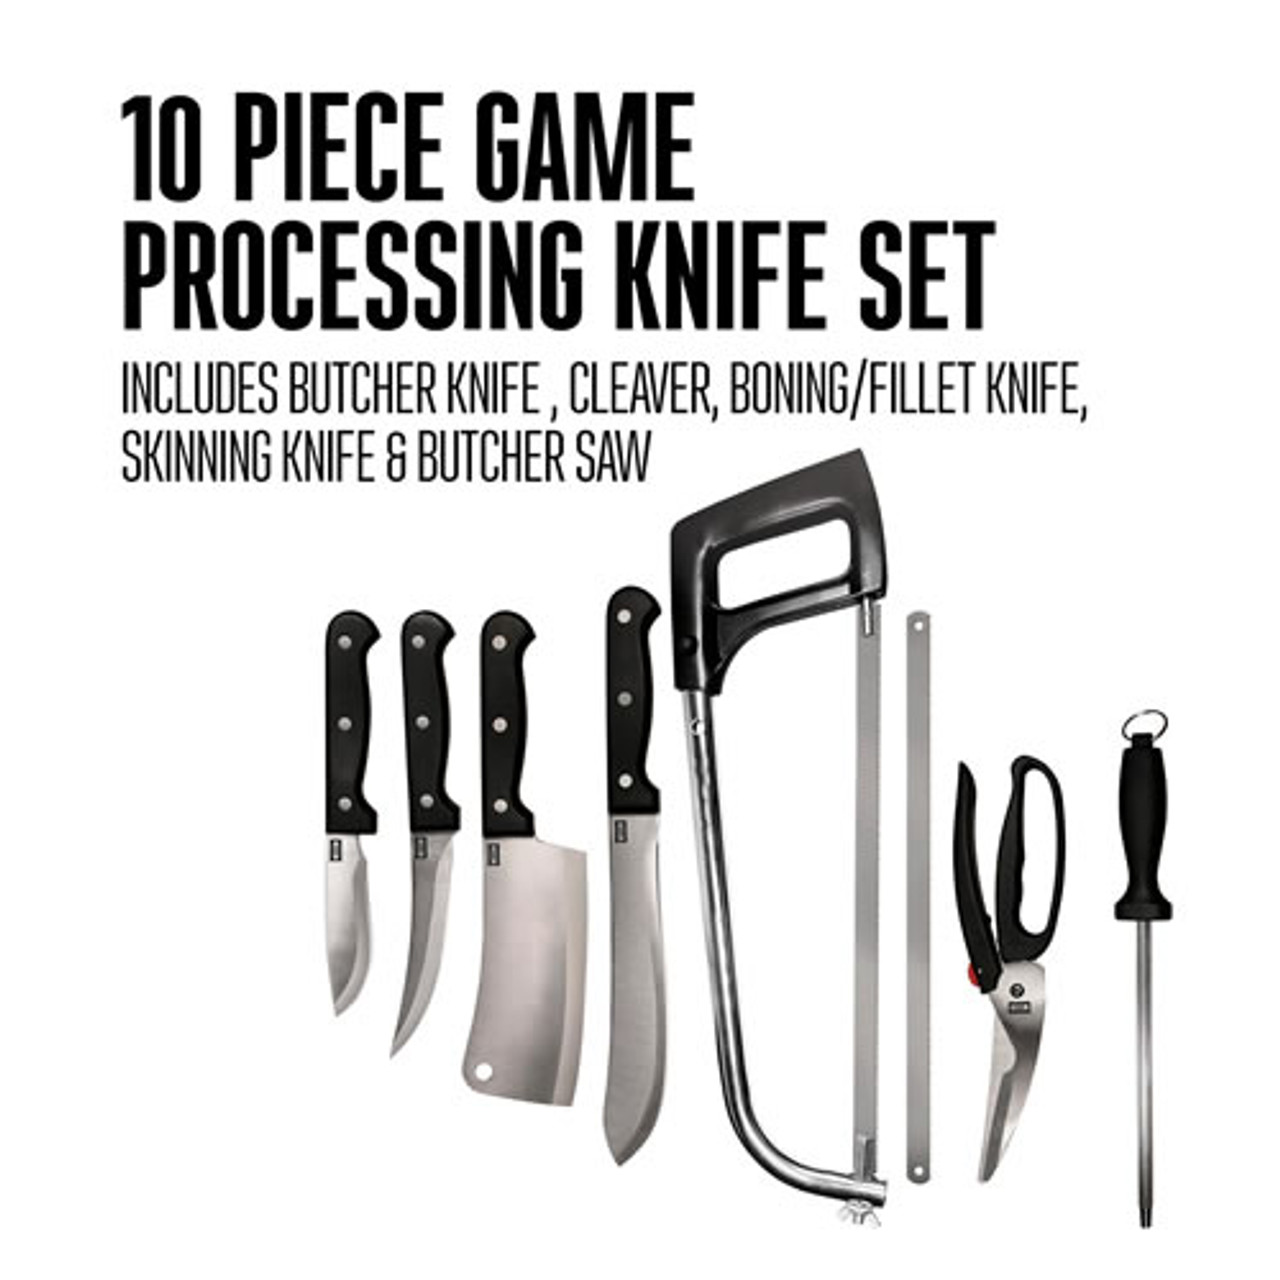 Game Processing Knife Set